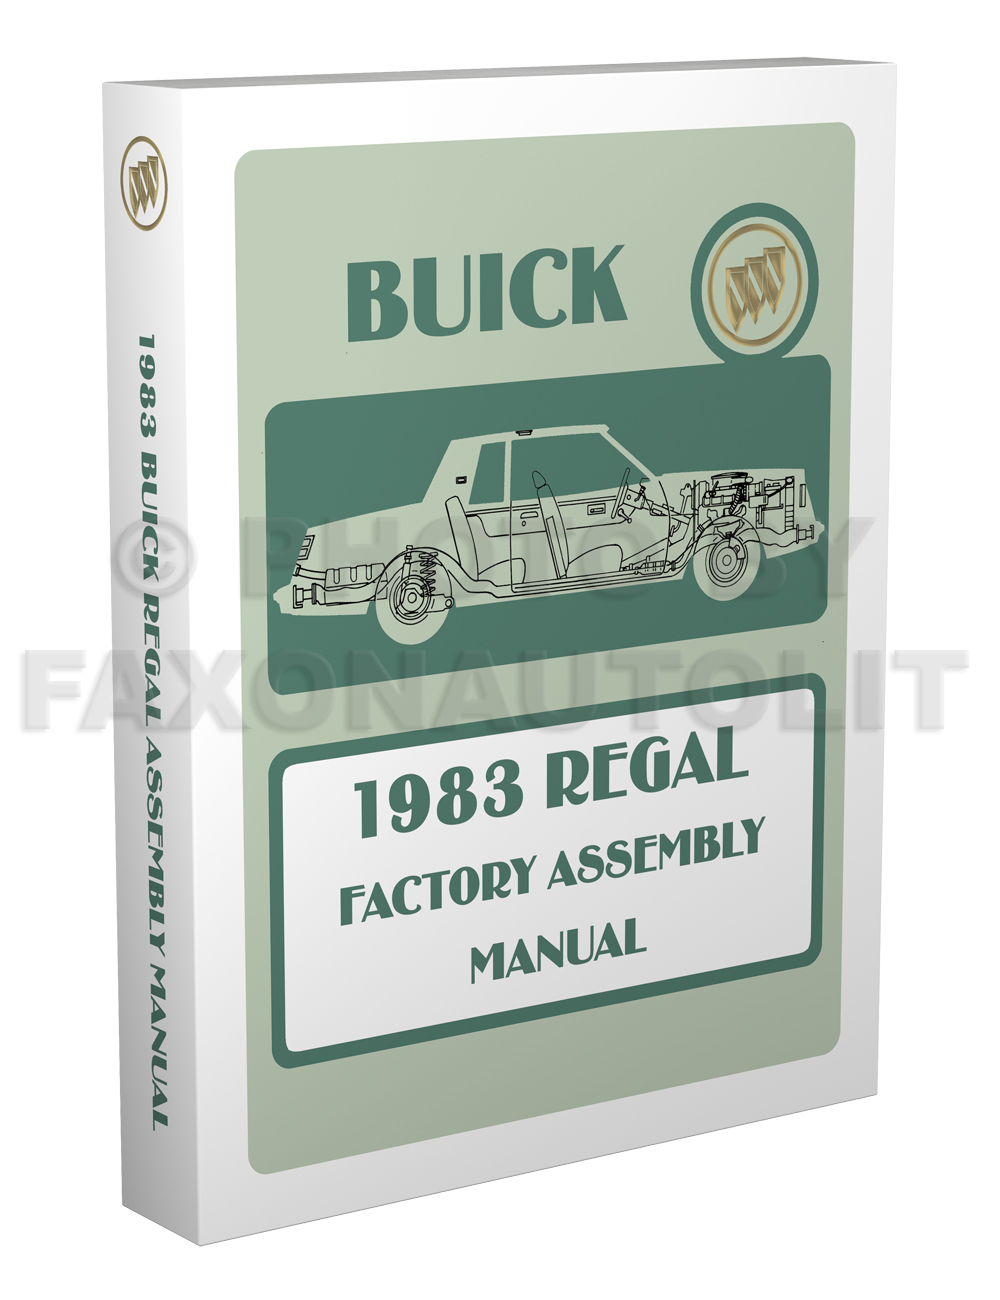 1983 Buick Regal Factory Assembly Manual Reprint